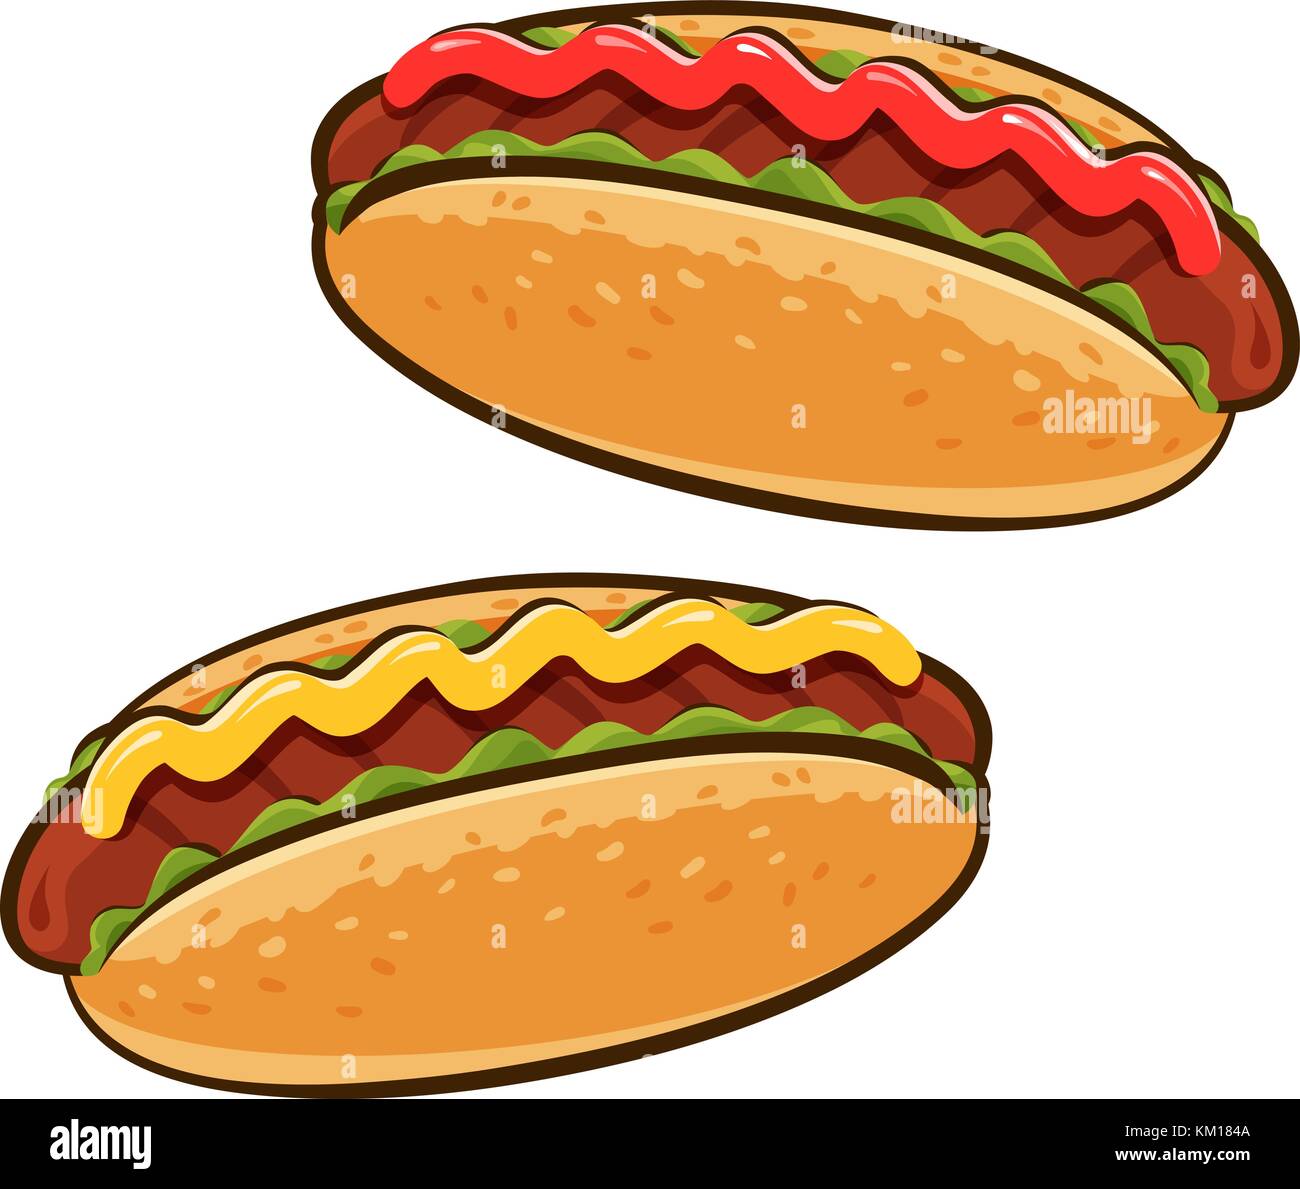 Hot dogs. American food, sandwich concept. Cartoon vector illustration Stock Vector